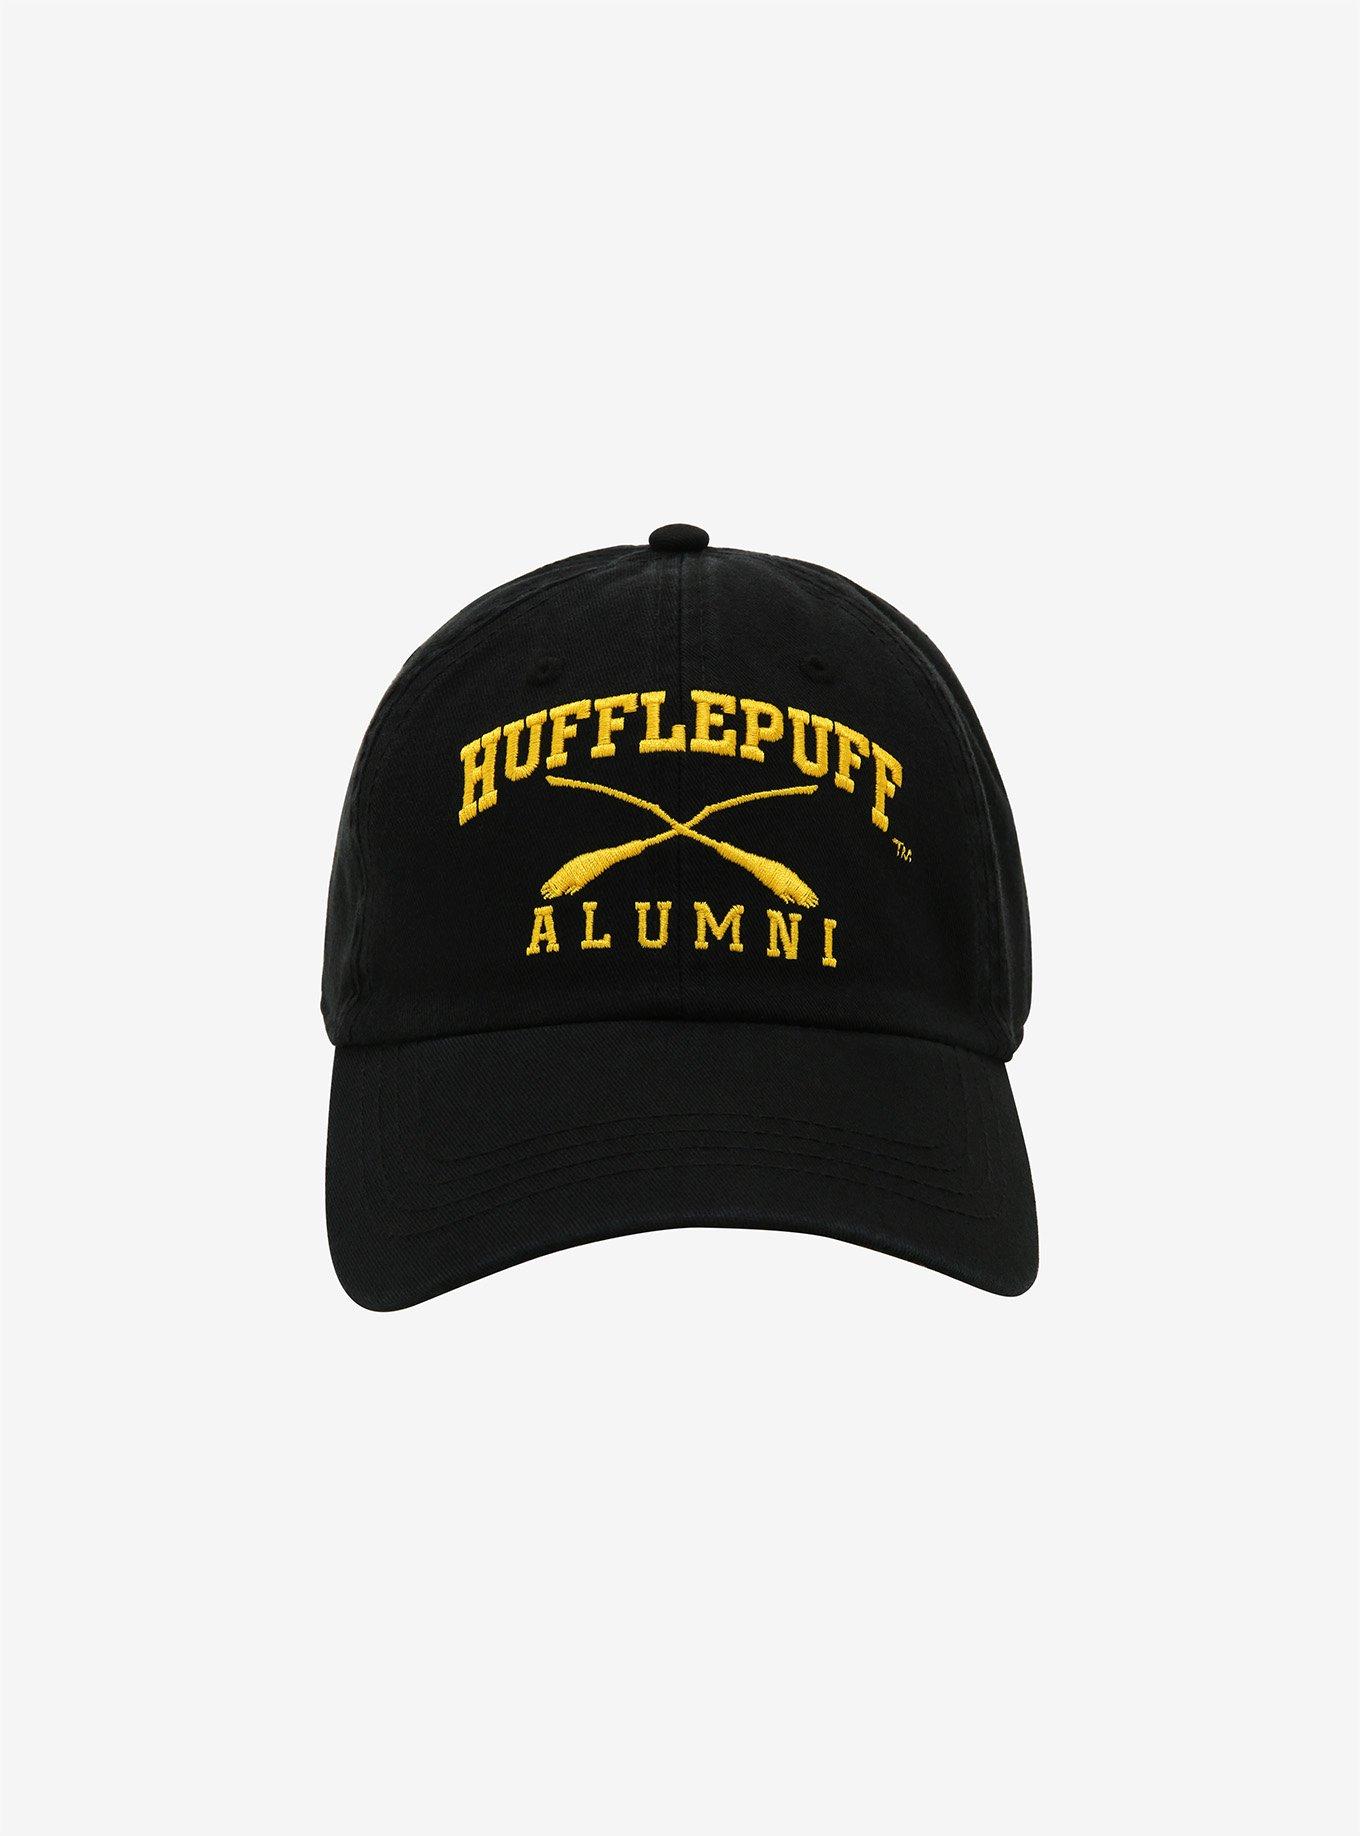 - Harry BoxLunch Potter | Cap BoxLunch Exclusive Hufflepuff Alumni